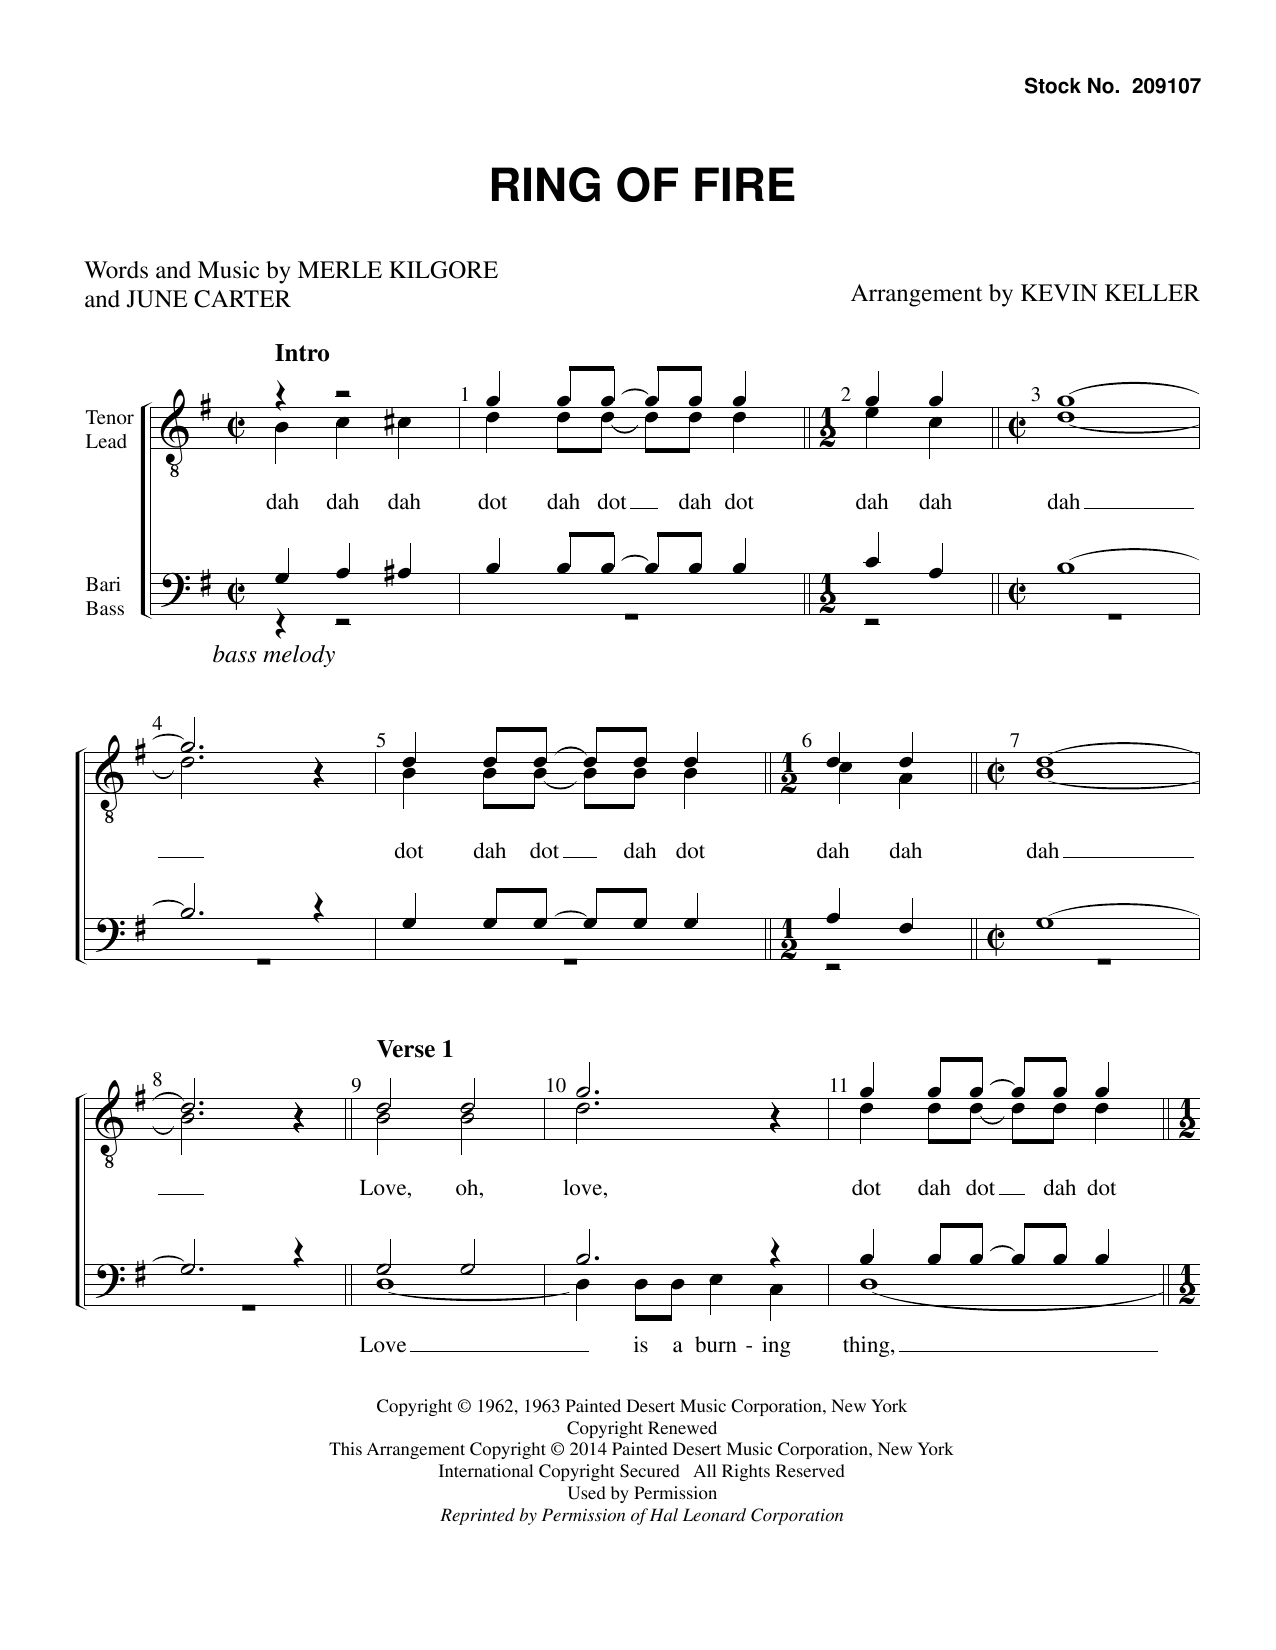 Johnny Cash Ring of Fire (arr. Kevin Keller) Sheet Music Notes & Chords for TTBB Choir - Download or Print PDF